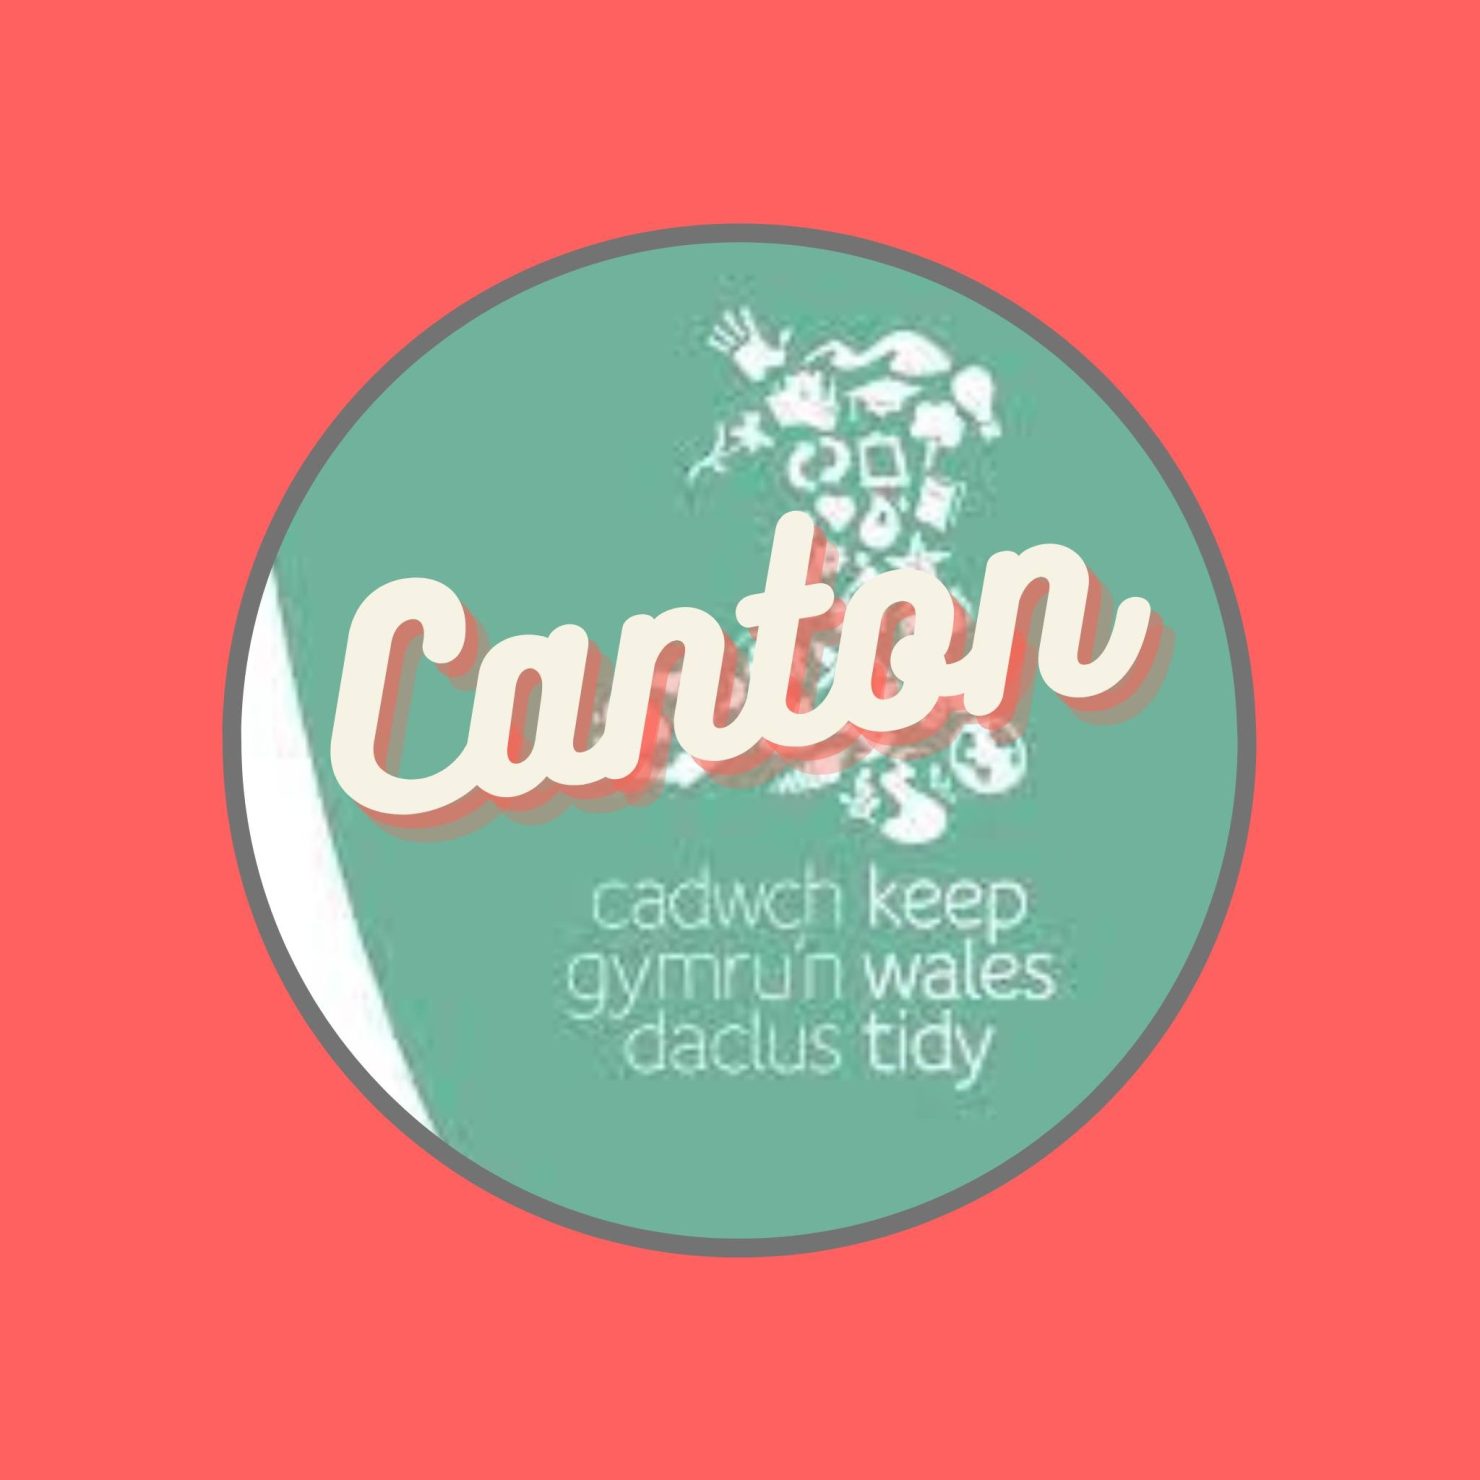 Keep Canton Tidy - Community Litter Pick